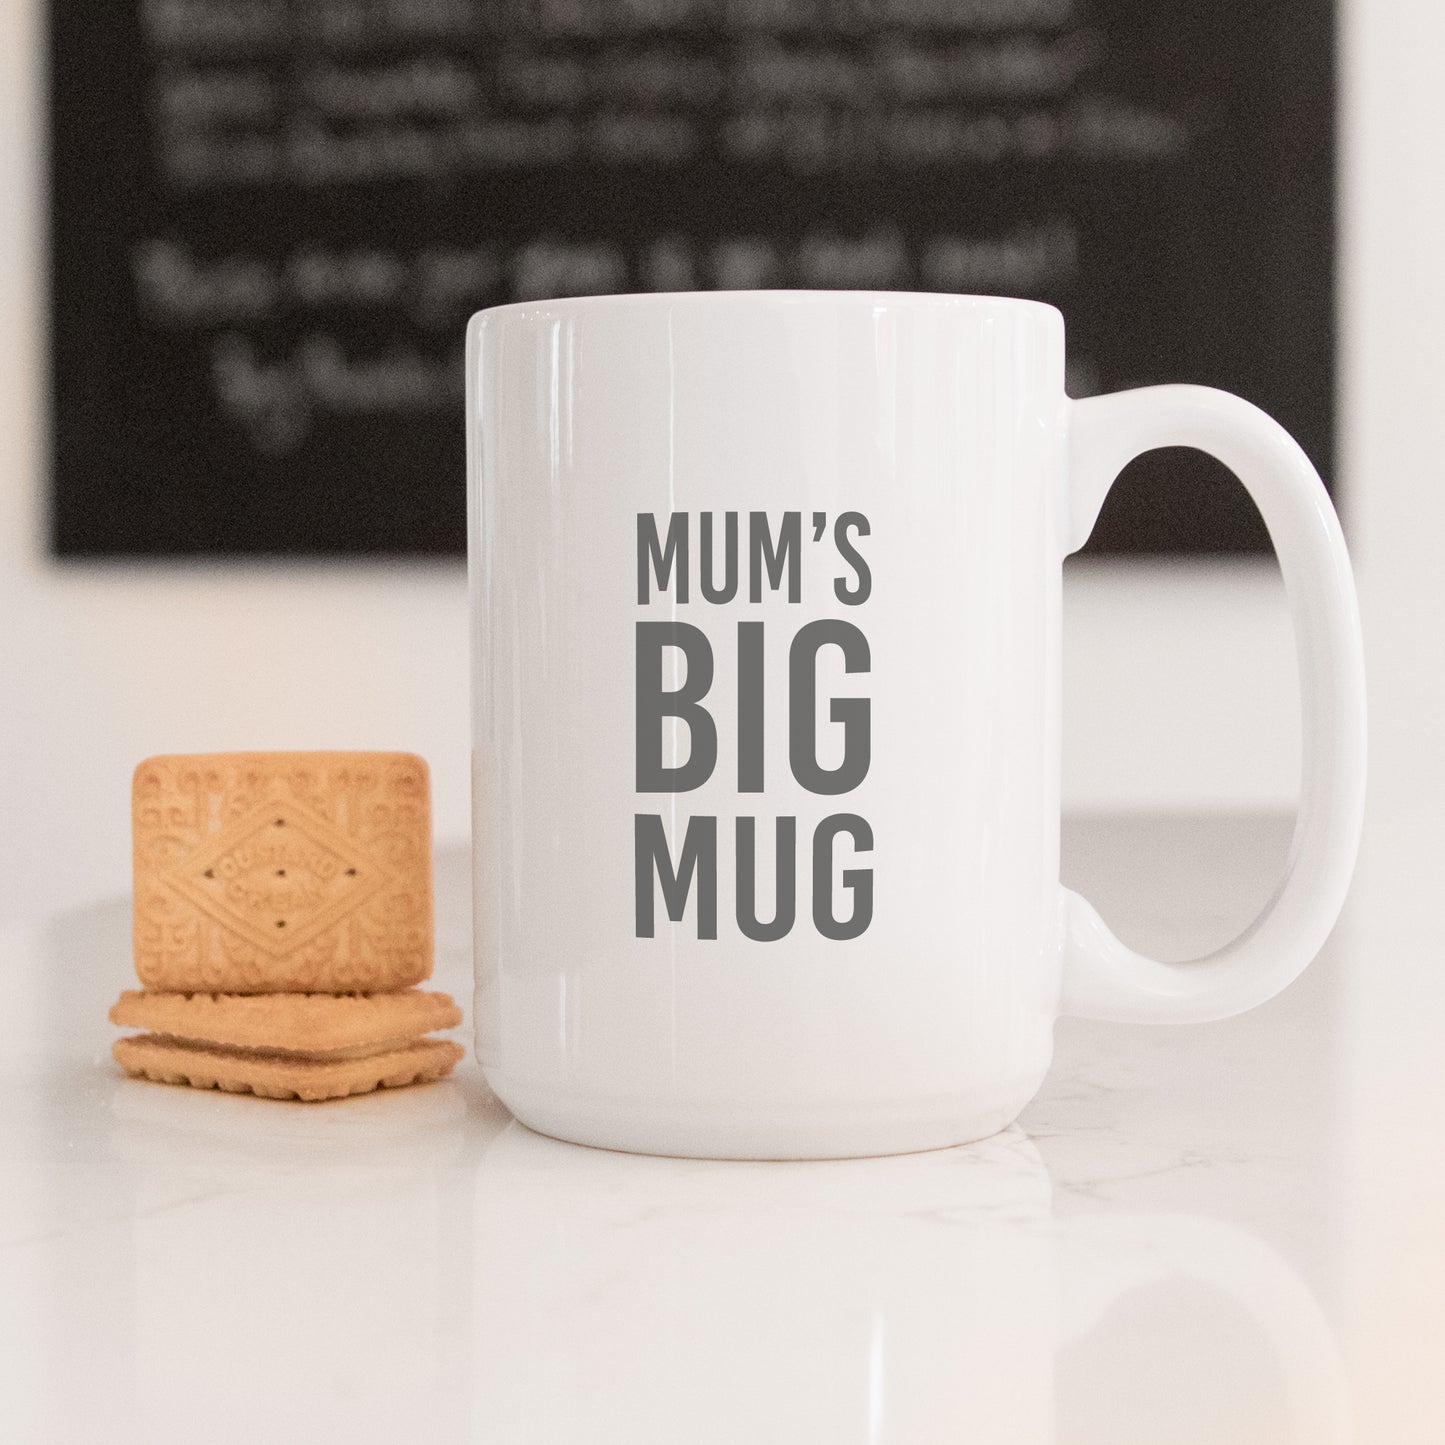 Mum's Big Mug